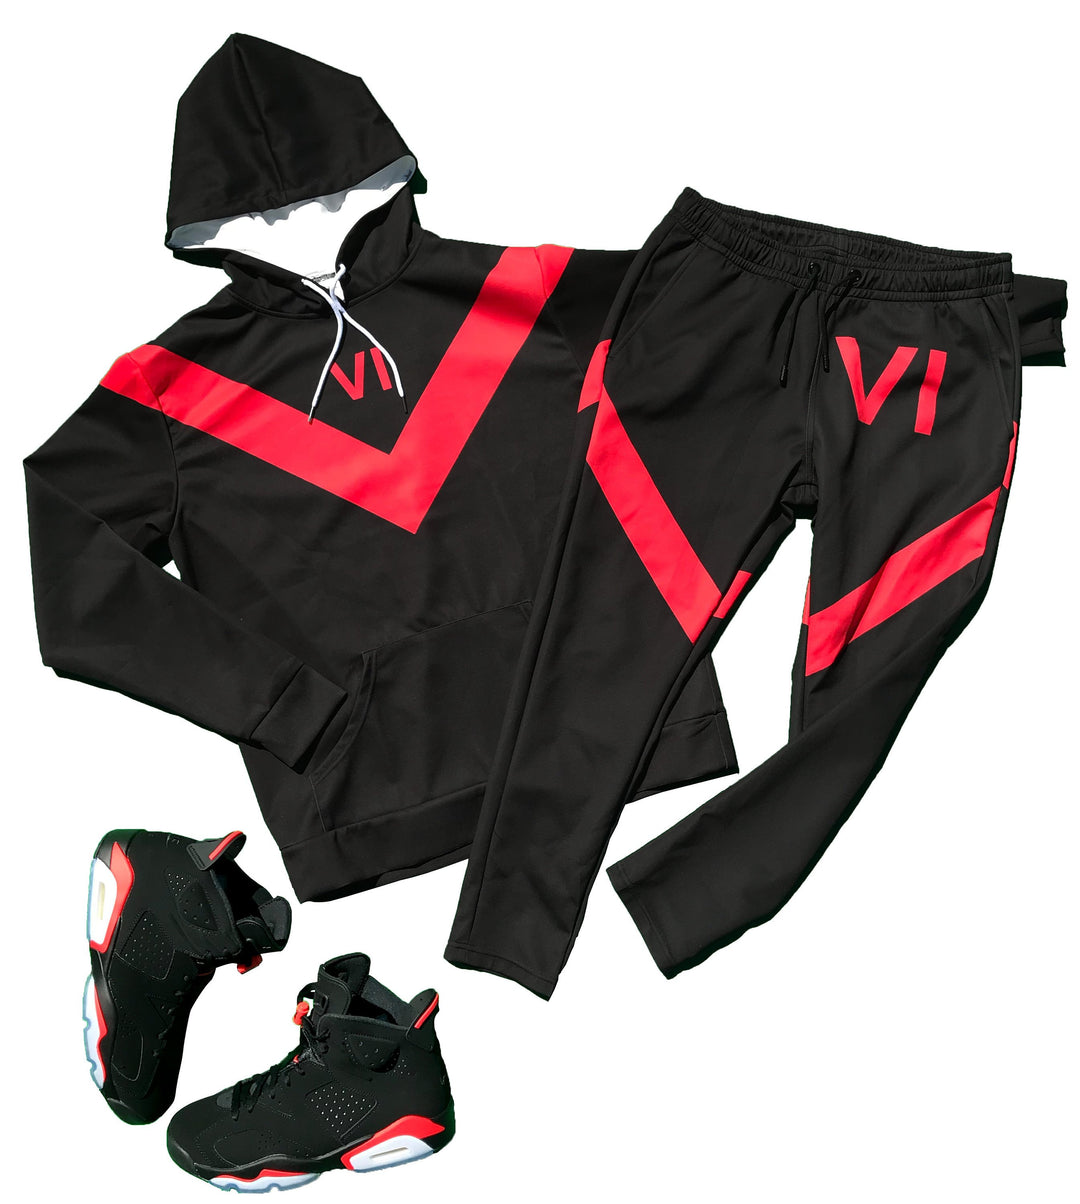 Jogging Suit | Retro Infrared Jordan 6 Colorblock  Jump Suit | Designed to Match Air Jordan 6 Sneakers Active